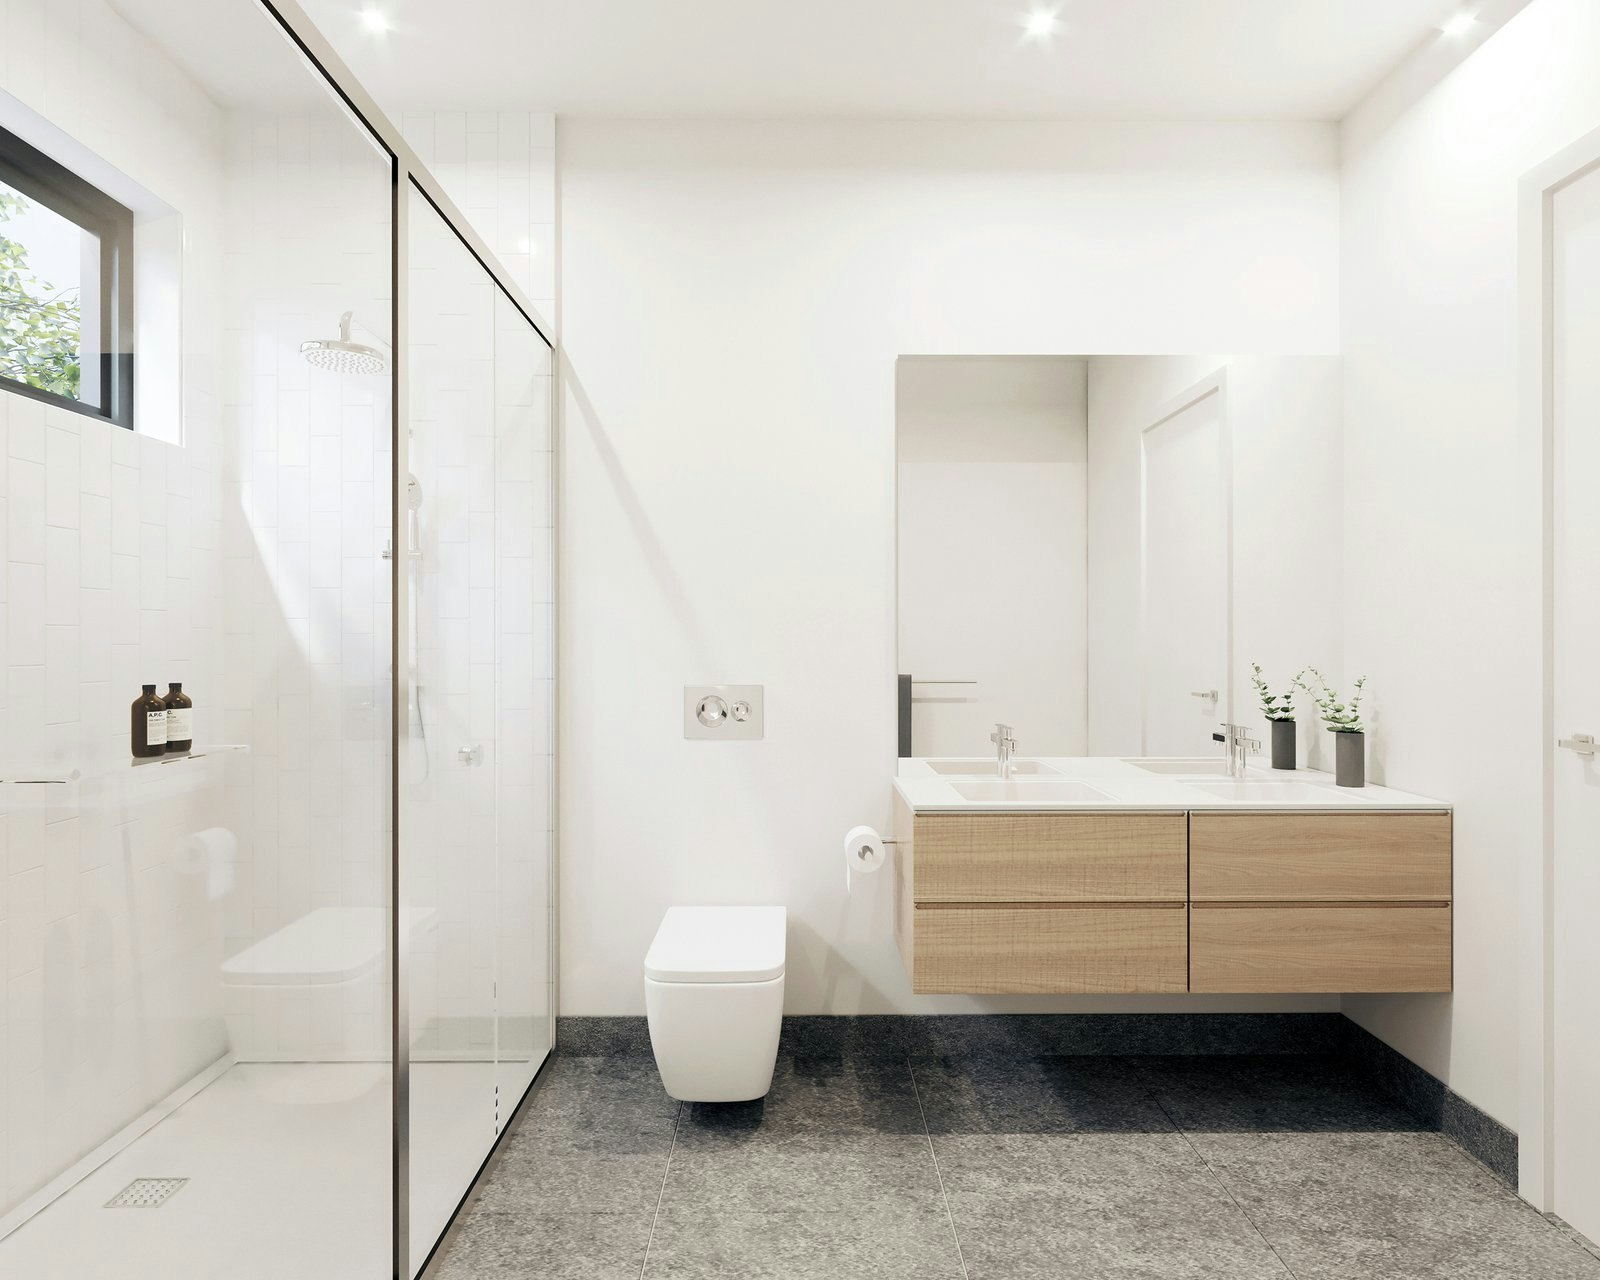 Image of bathroom